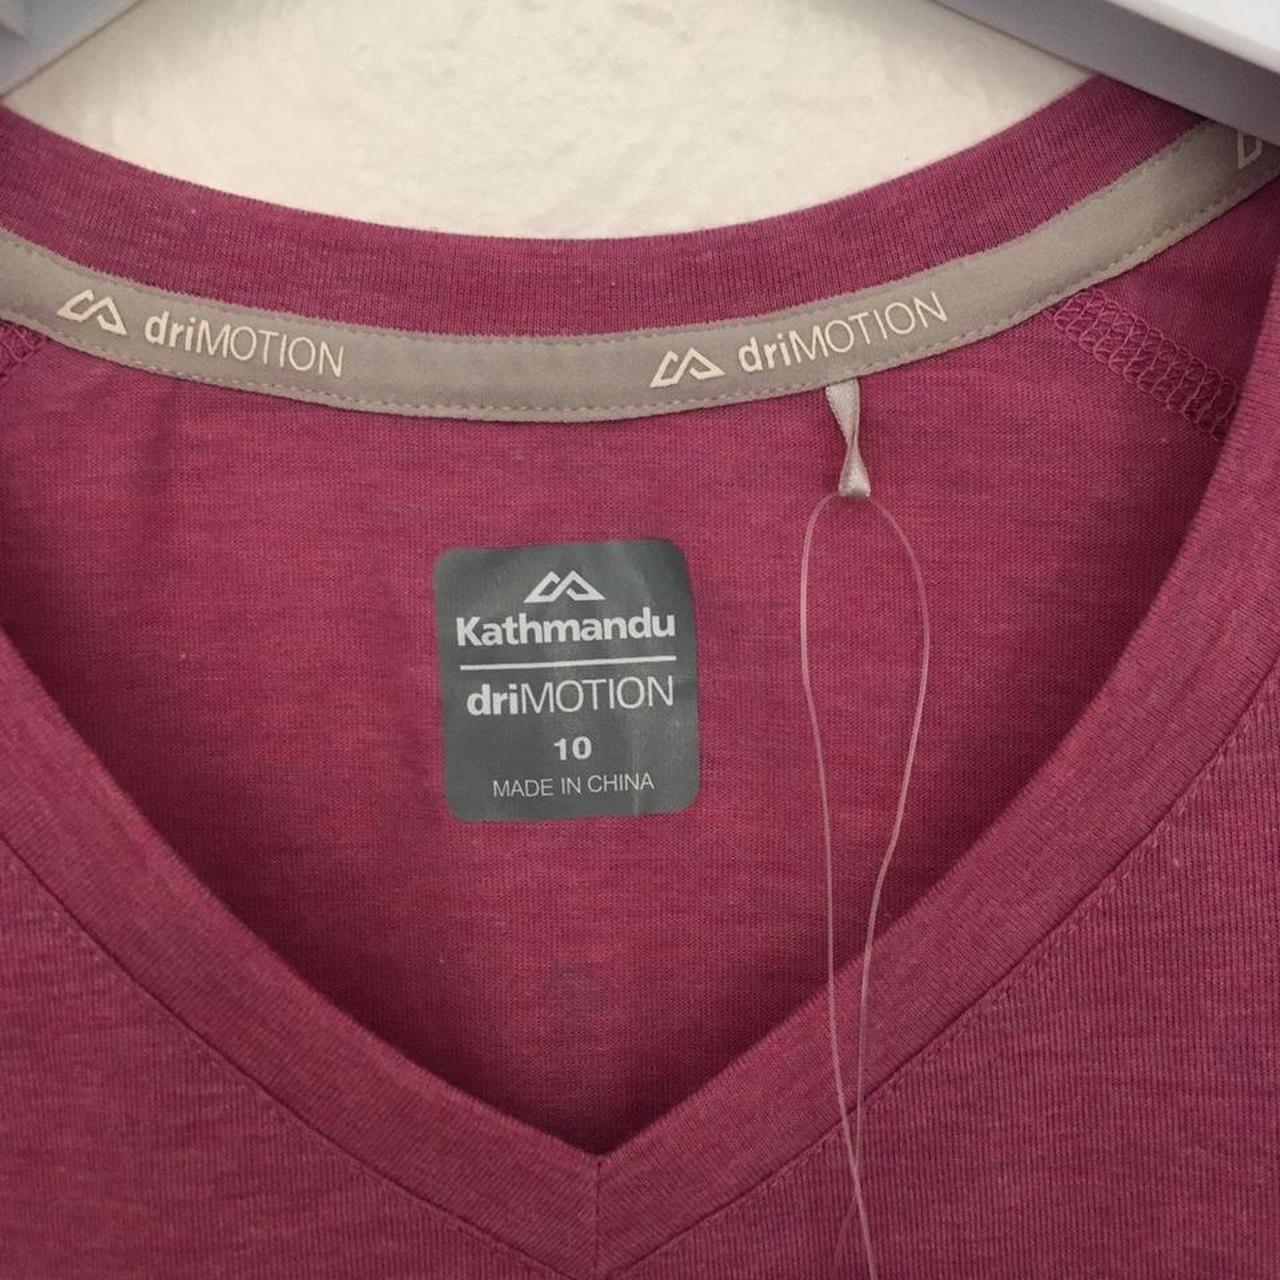 Brand new(with tags) pink Kathmandu t-shirt size... - Depop